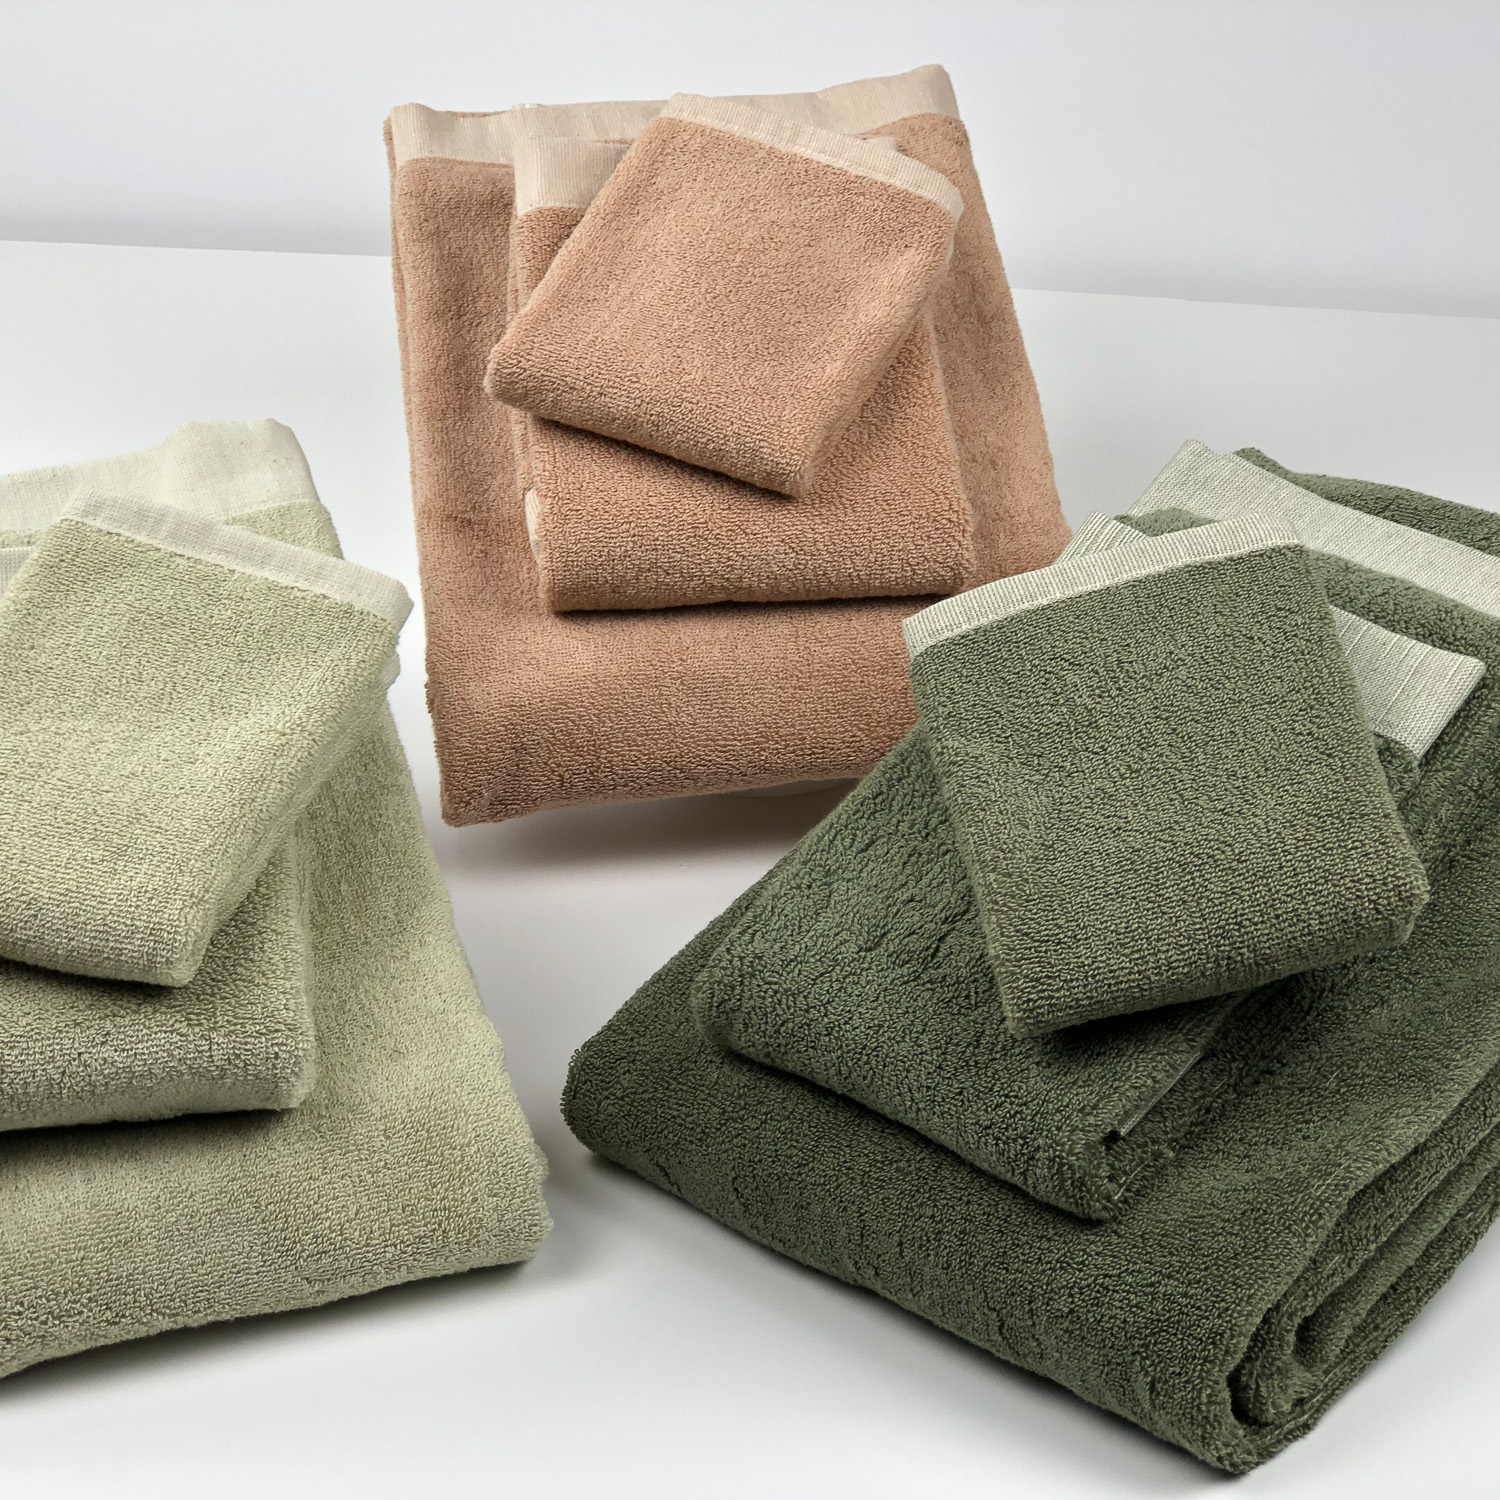 https://www.earthsake.com/store/media/earthsake.towels.colors.jpg